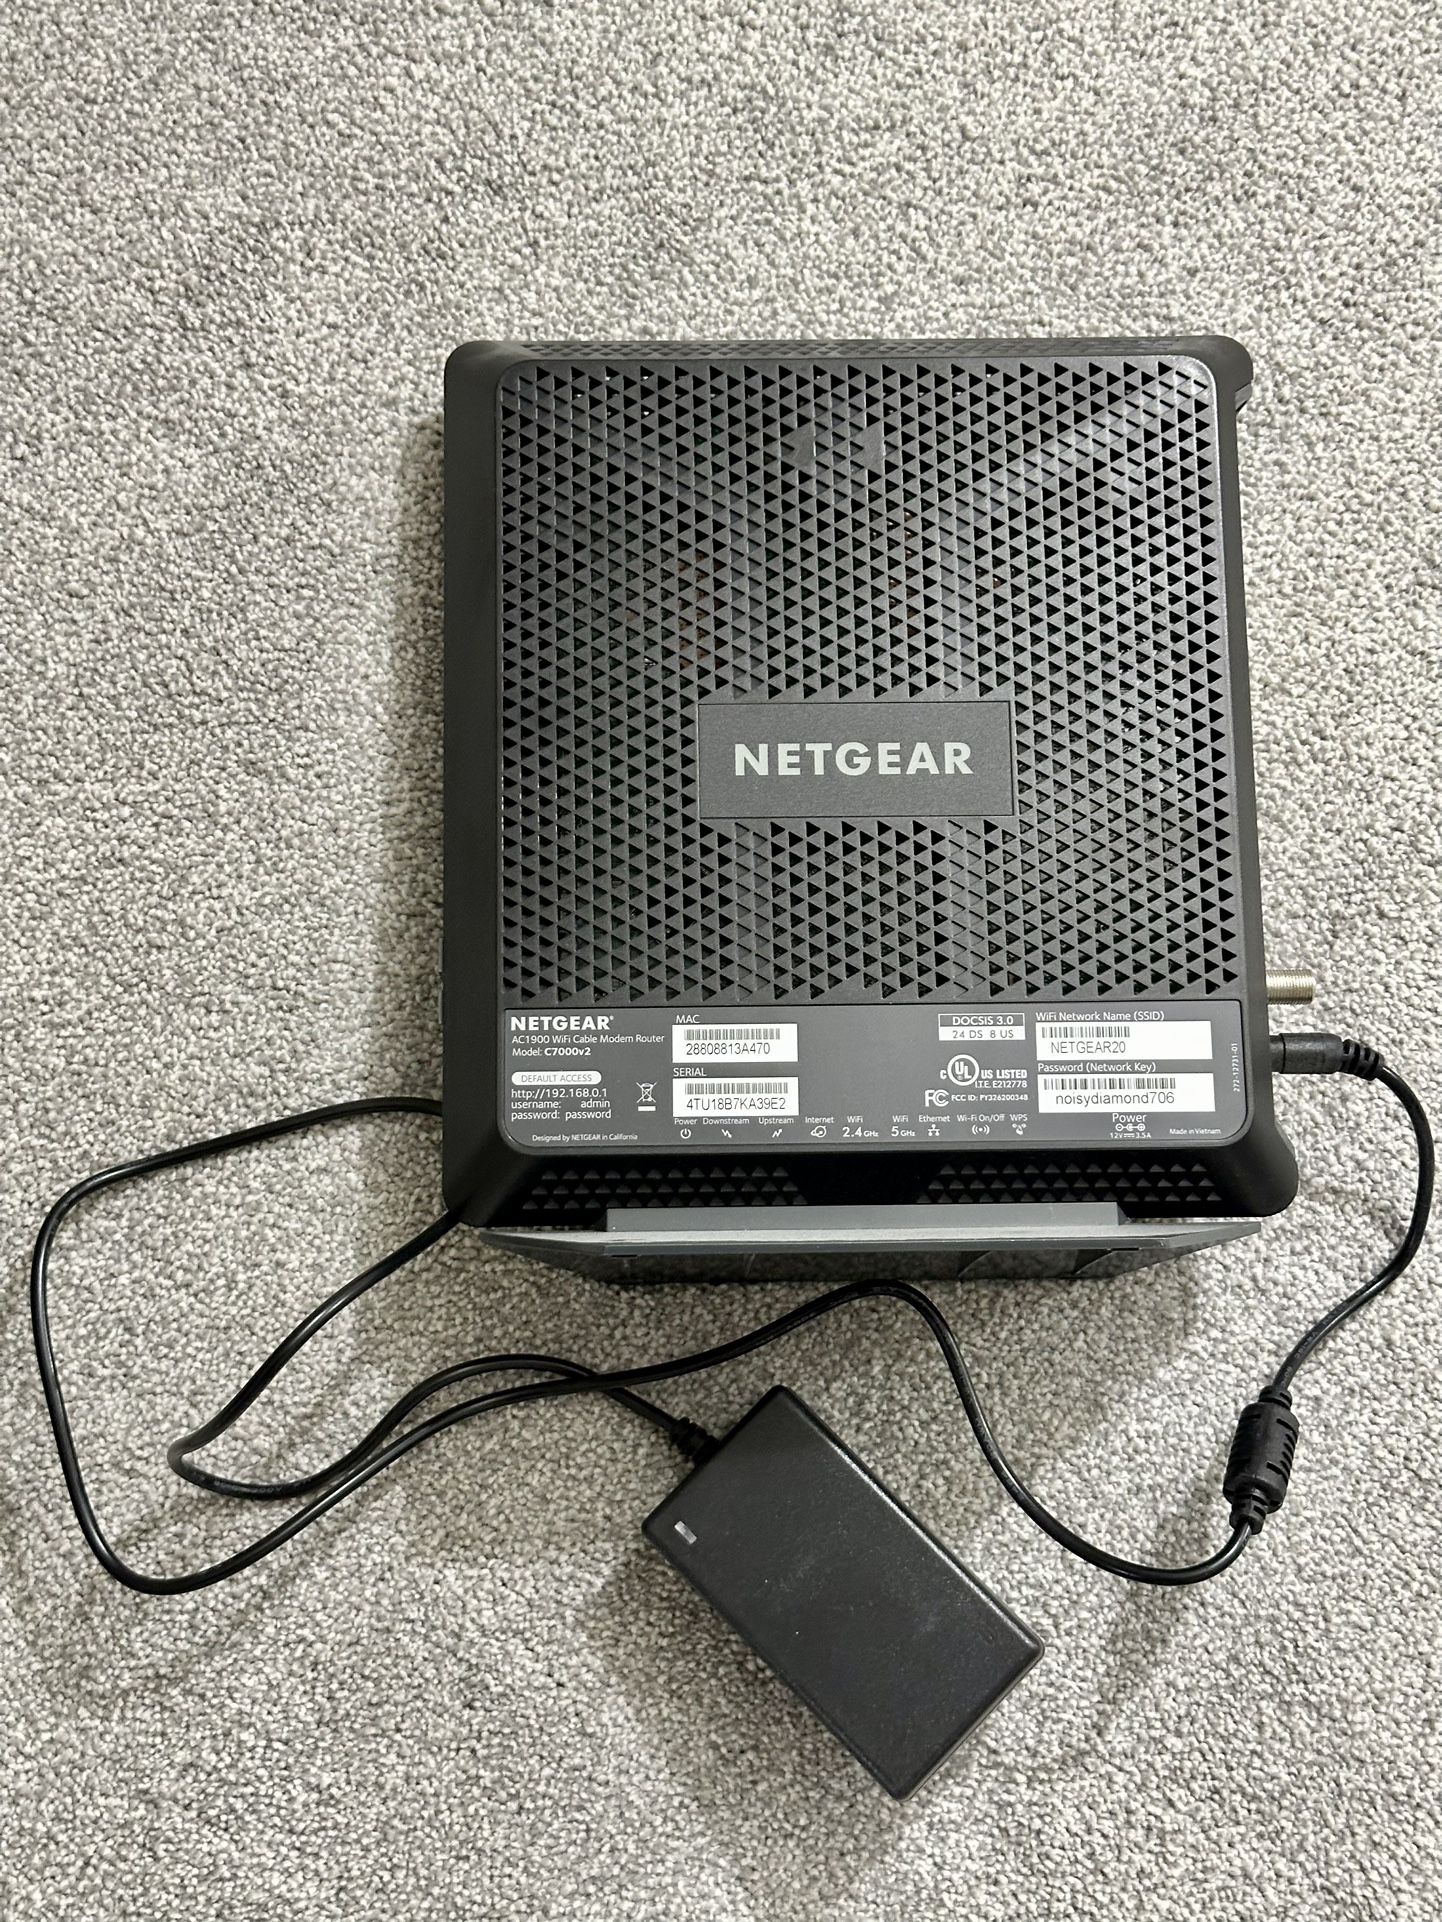 NETGEAR Nighthawk Modem WiFi Router Combo C7000